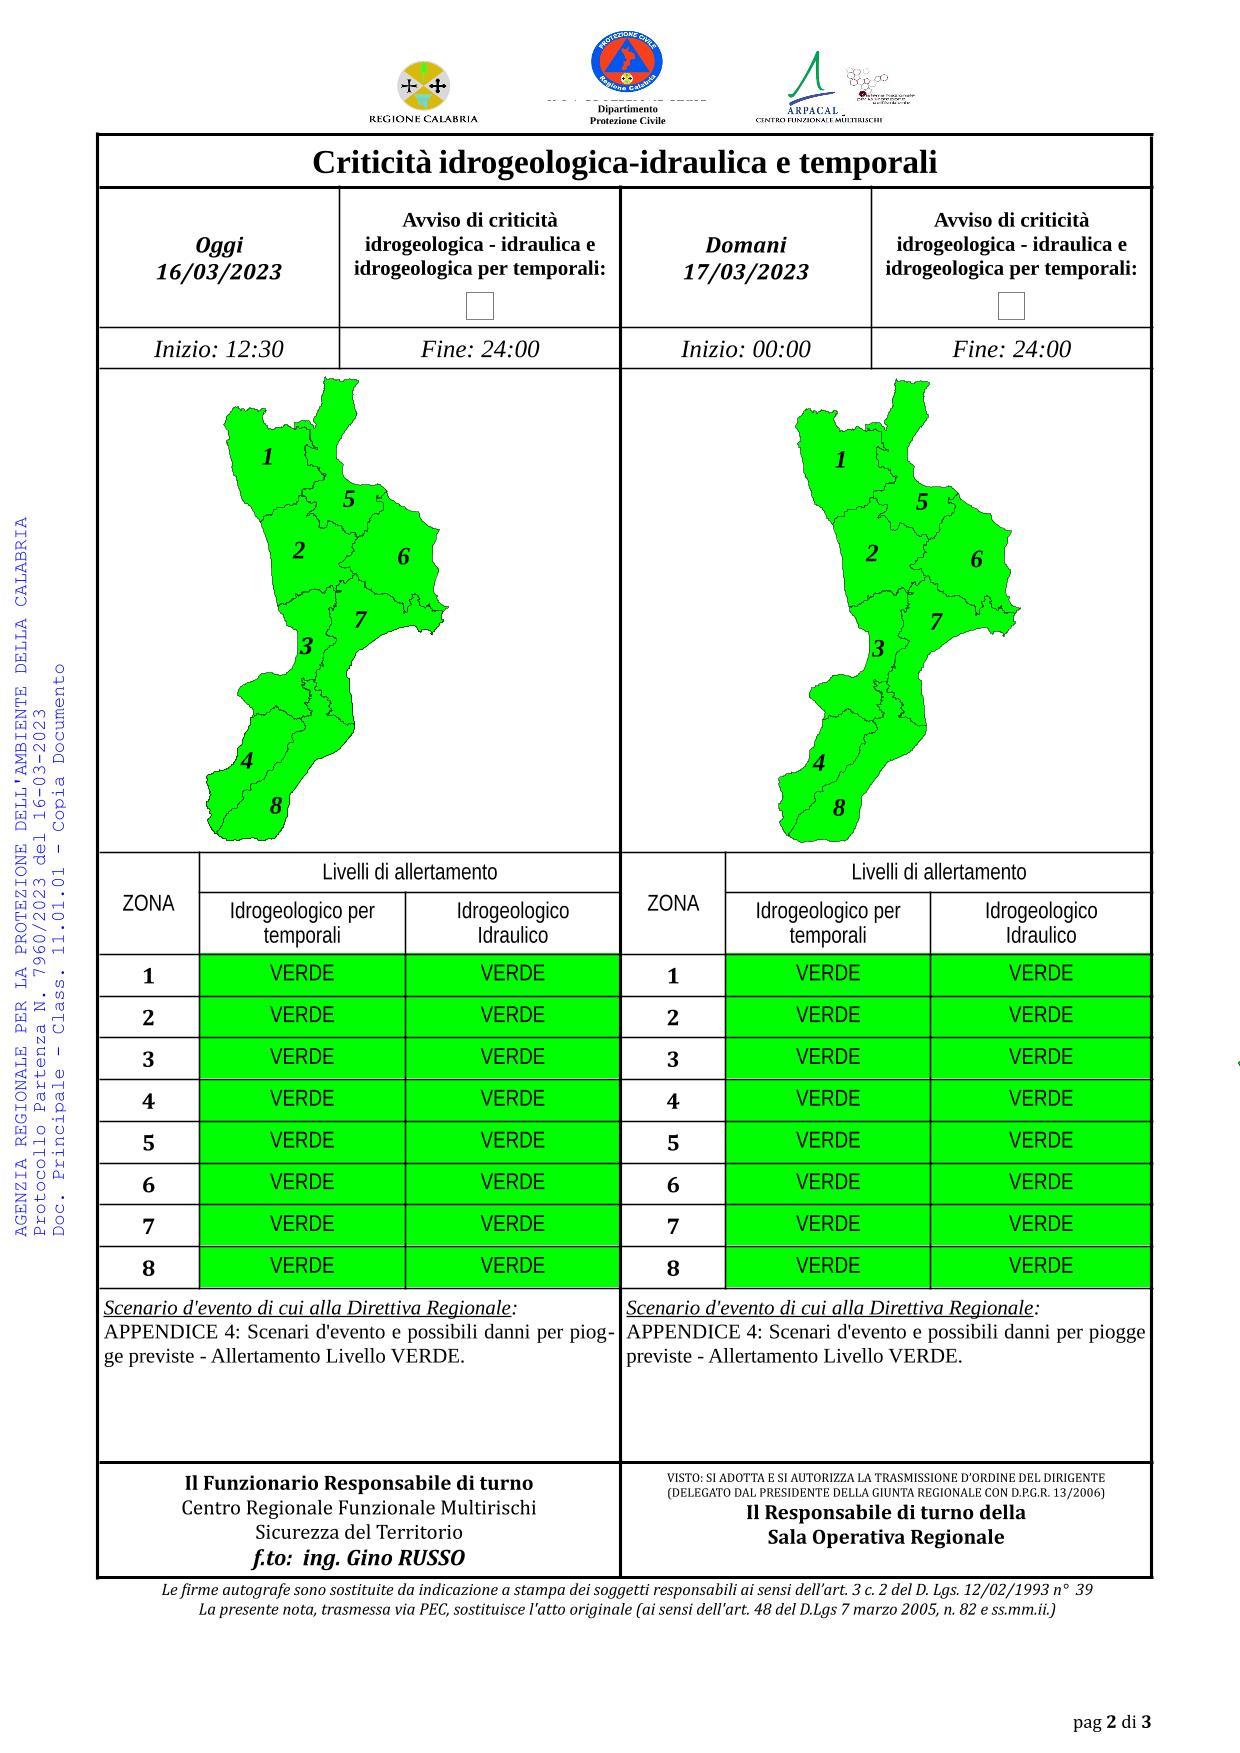 Criticità idrogeologica-idraulica e temporali in Calabria 16-03-2023